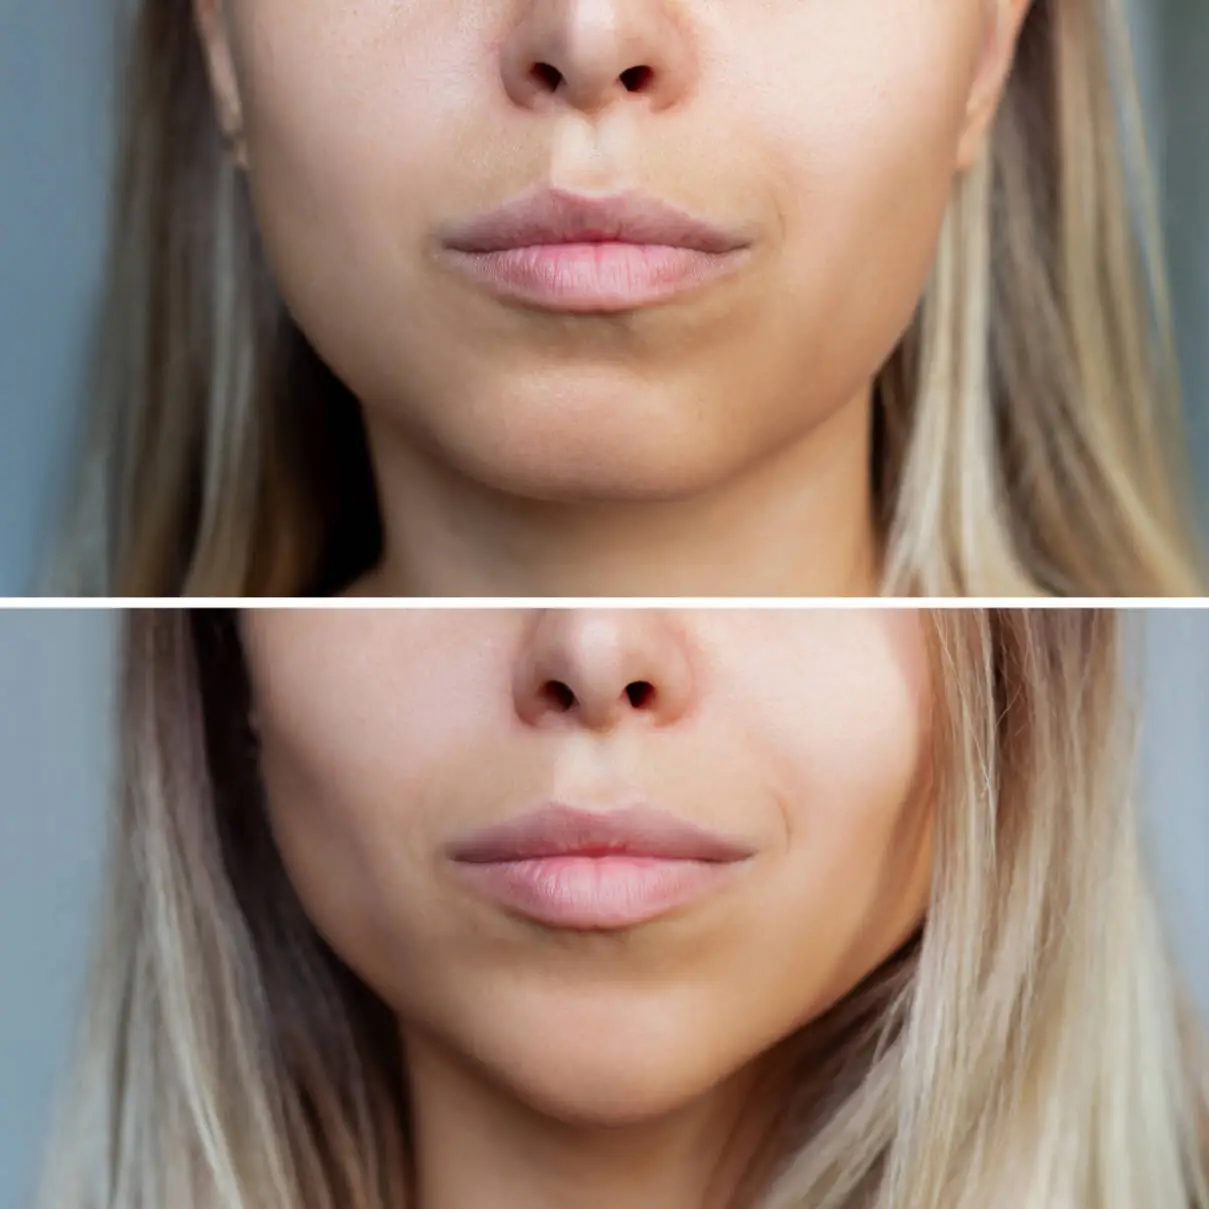 Juvederm Ultra Smile - before and after lip filler